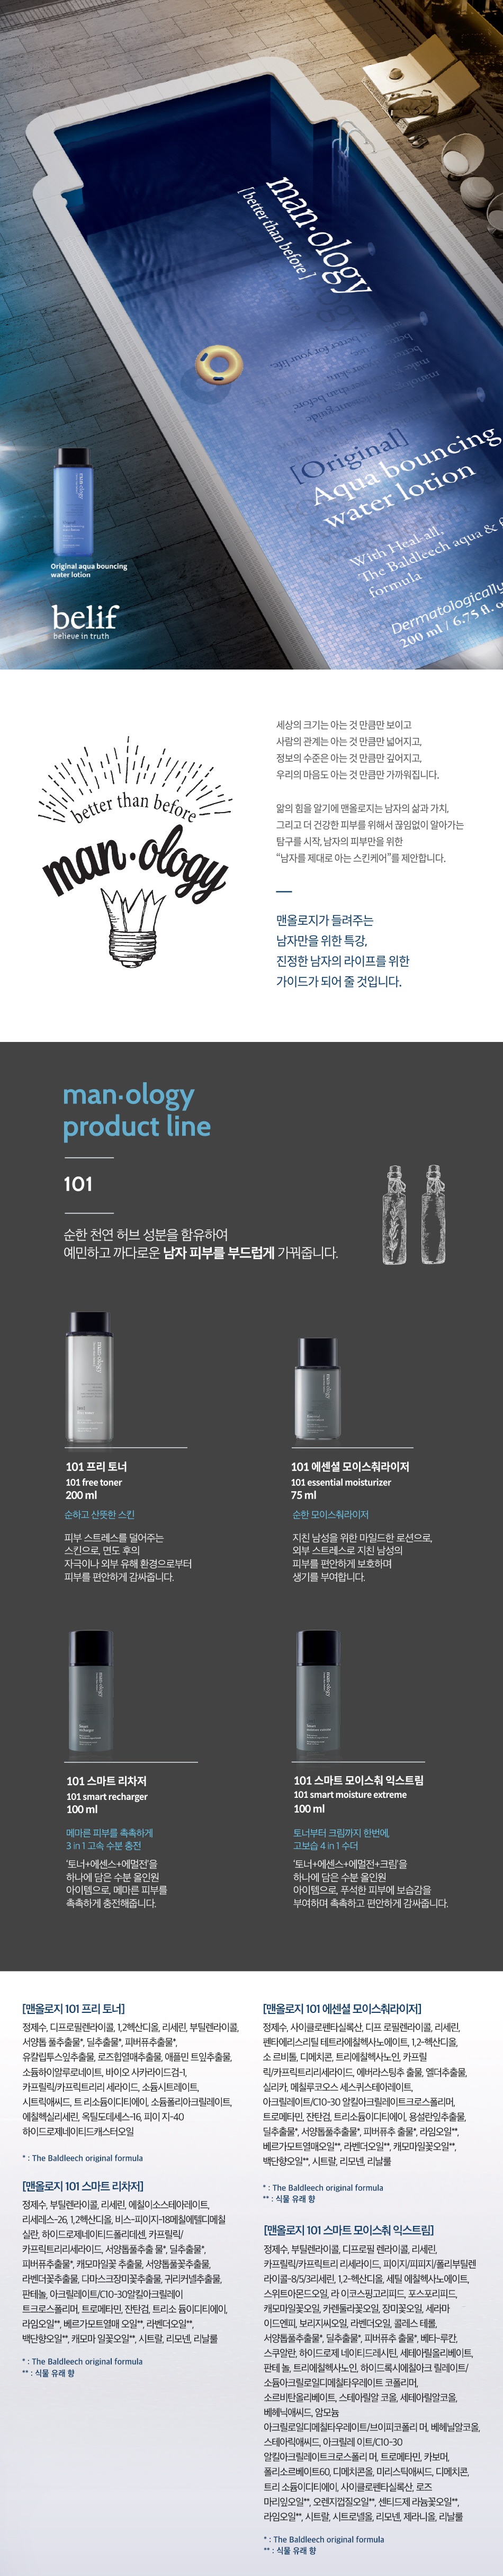 Belif Manology 101 Free Toner korean men skincare product online shop malaysia India macau1